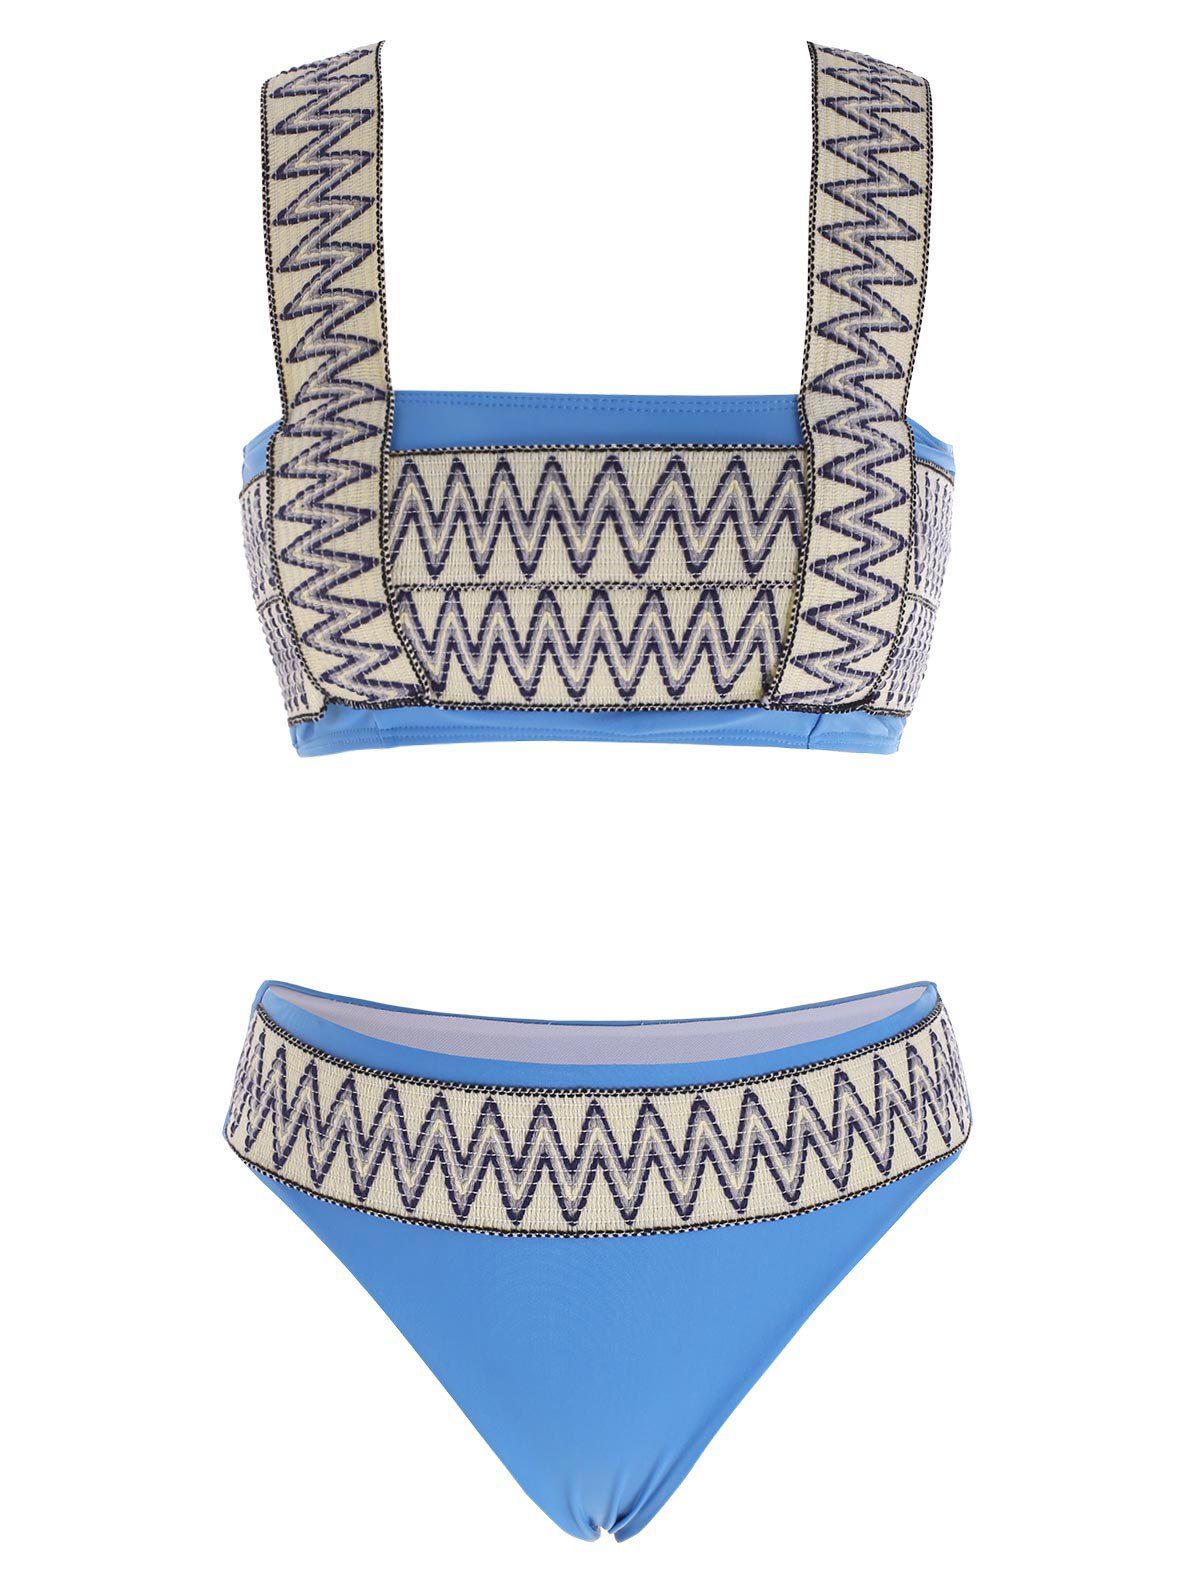 Ethnic Bikini Swimwear Zig Zag Print Embroidered Tape Square Neck Beach Swimsuit - LIGHT BLUE XL